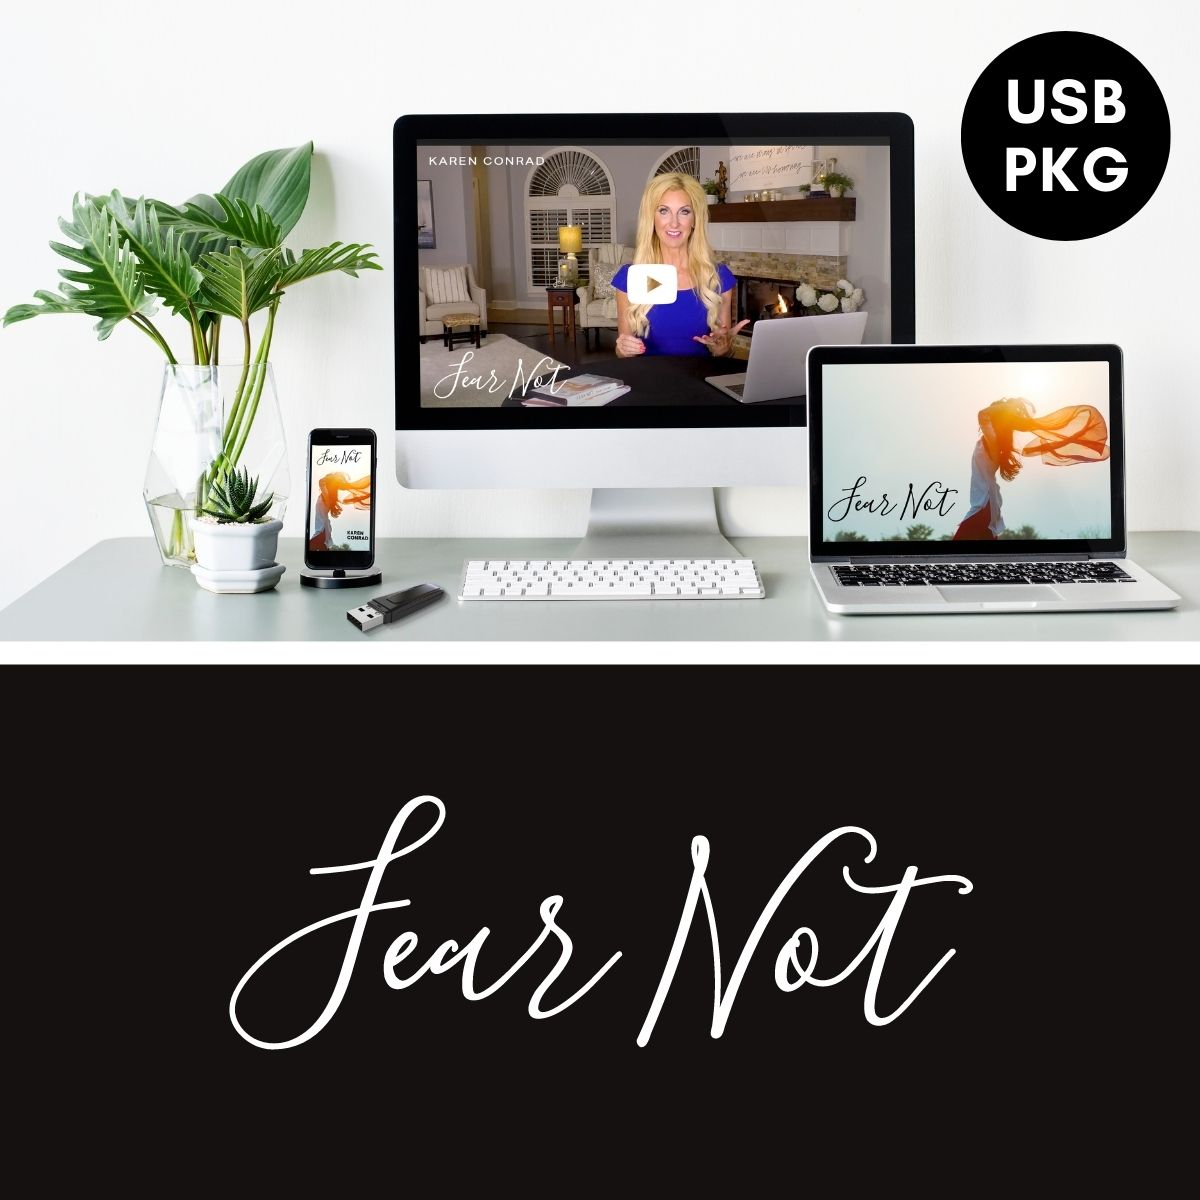 Fear Not USB PKG